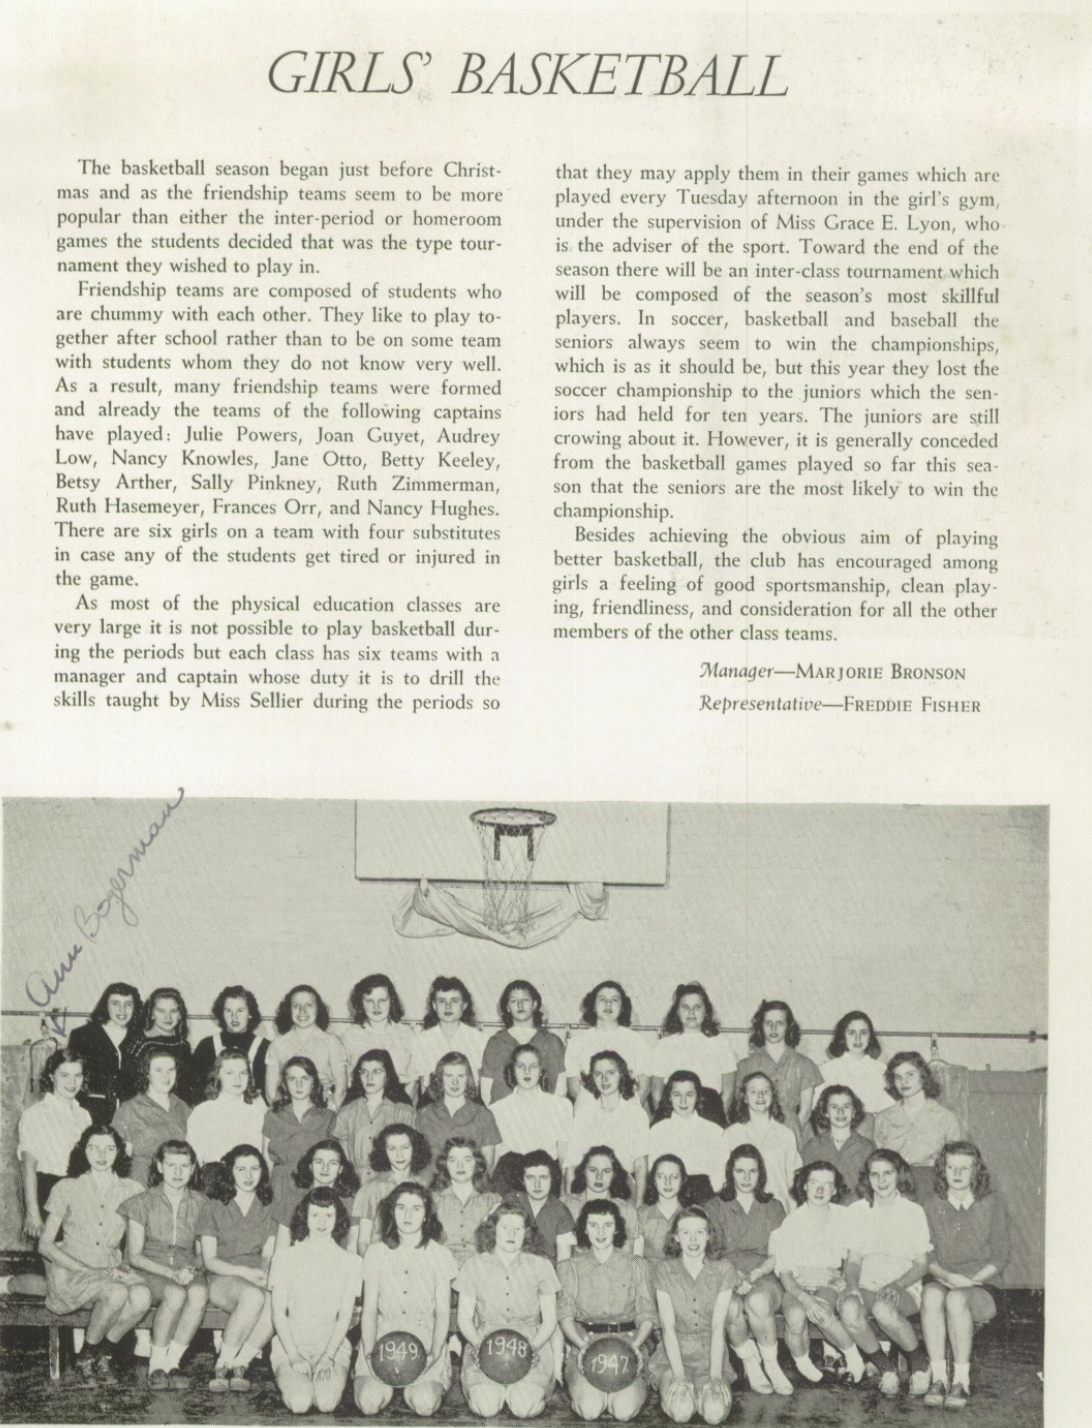 1947 Girls’ Basketball Team